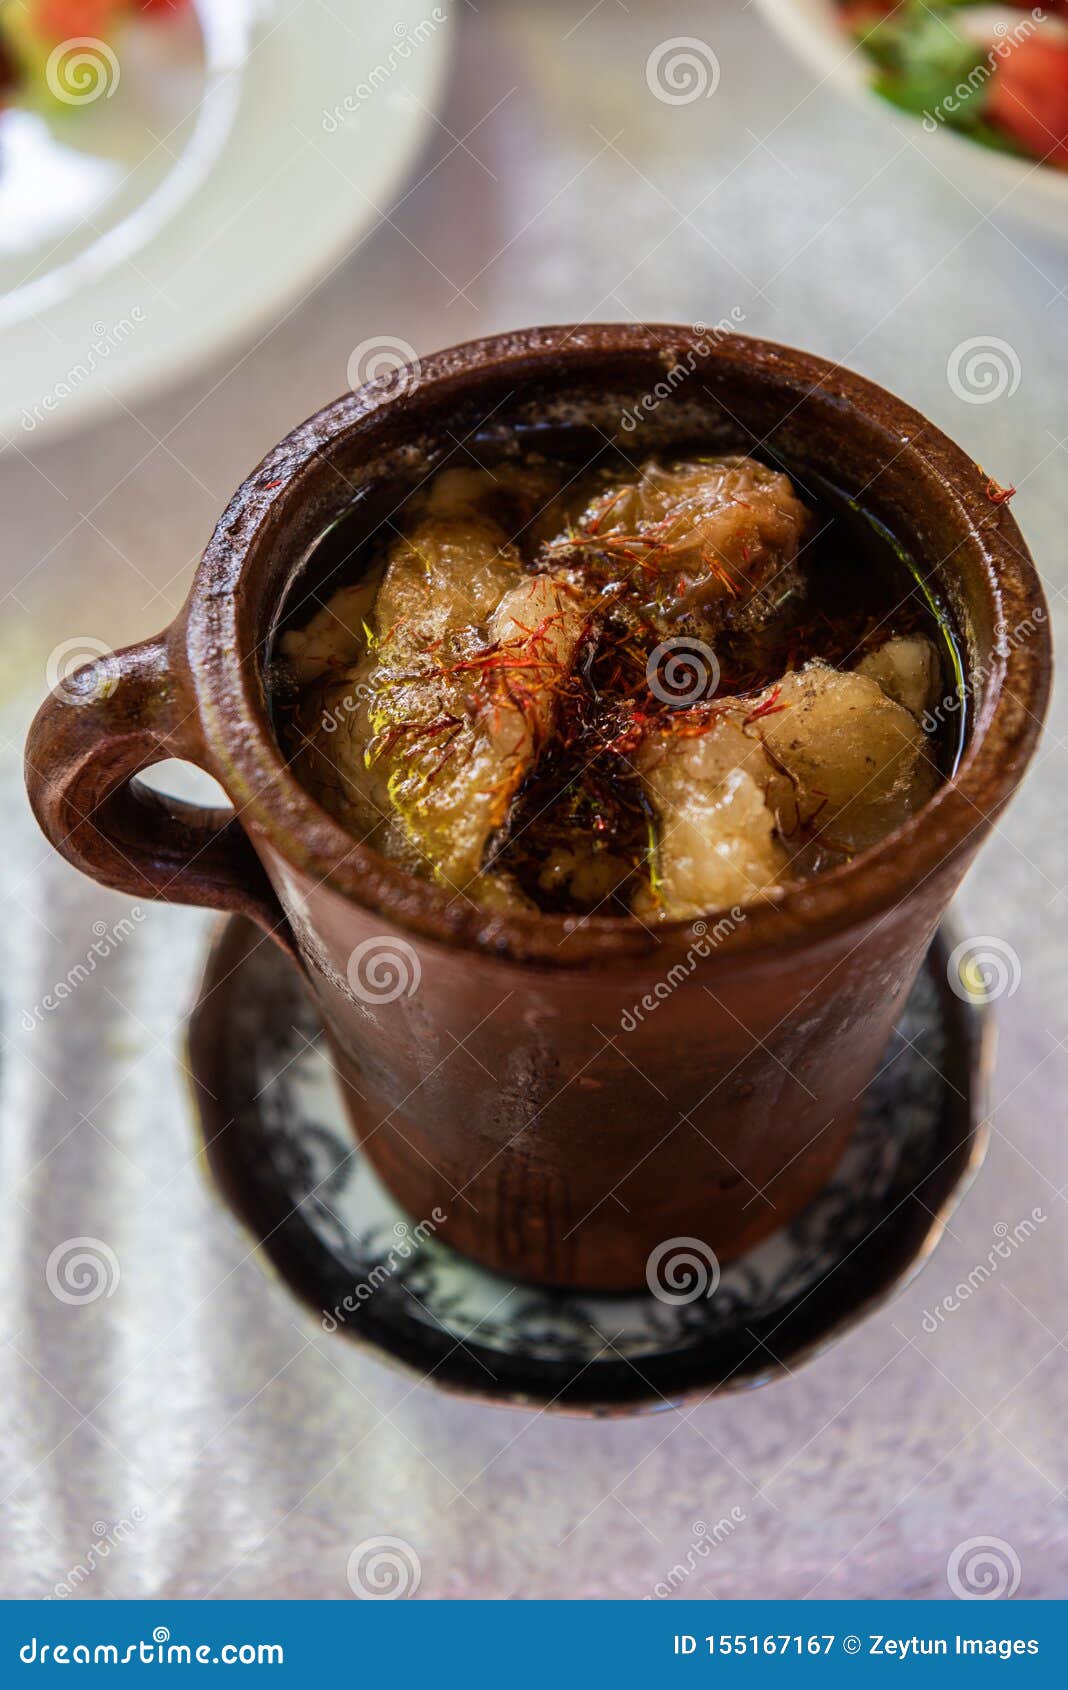 pot of piti soup in sheki, azerbaijan